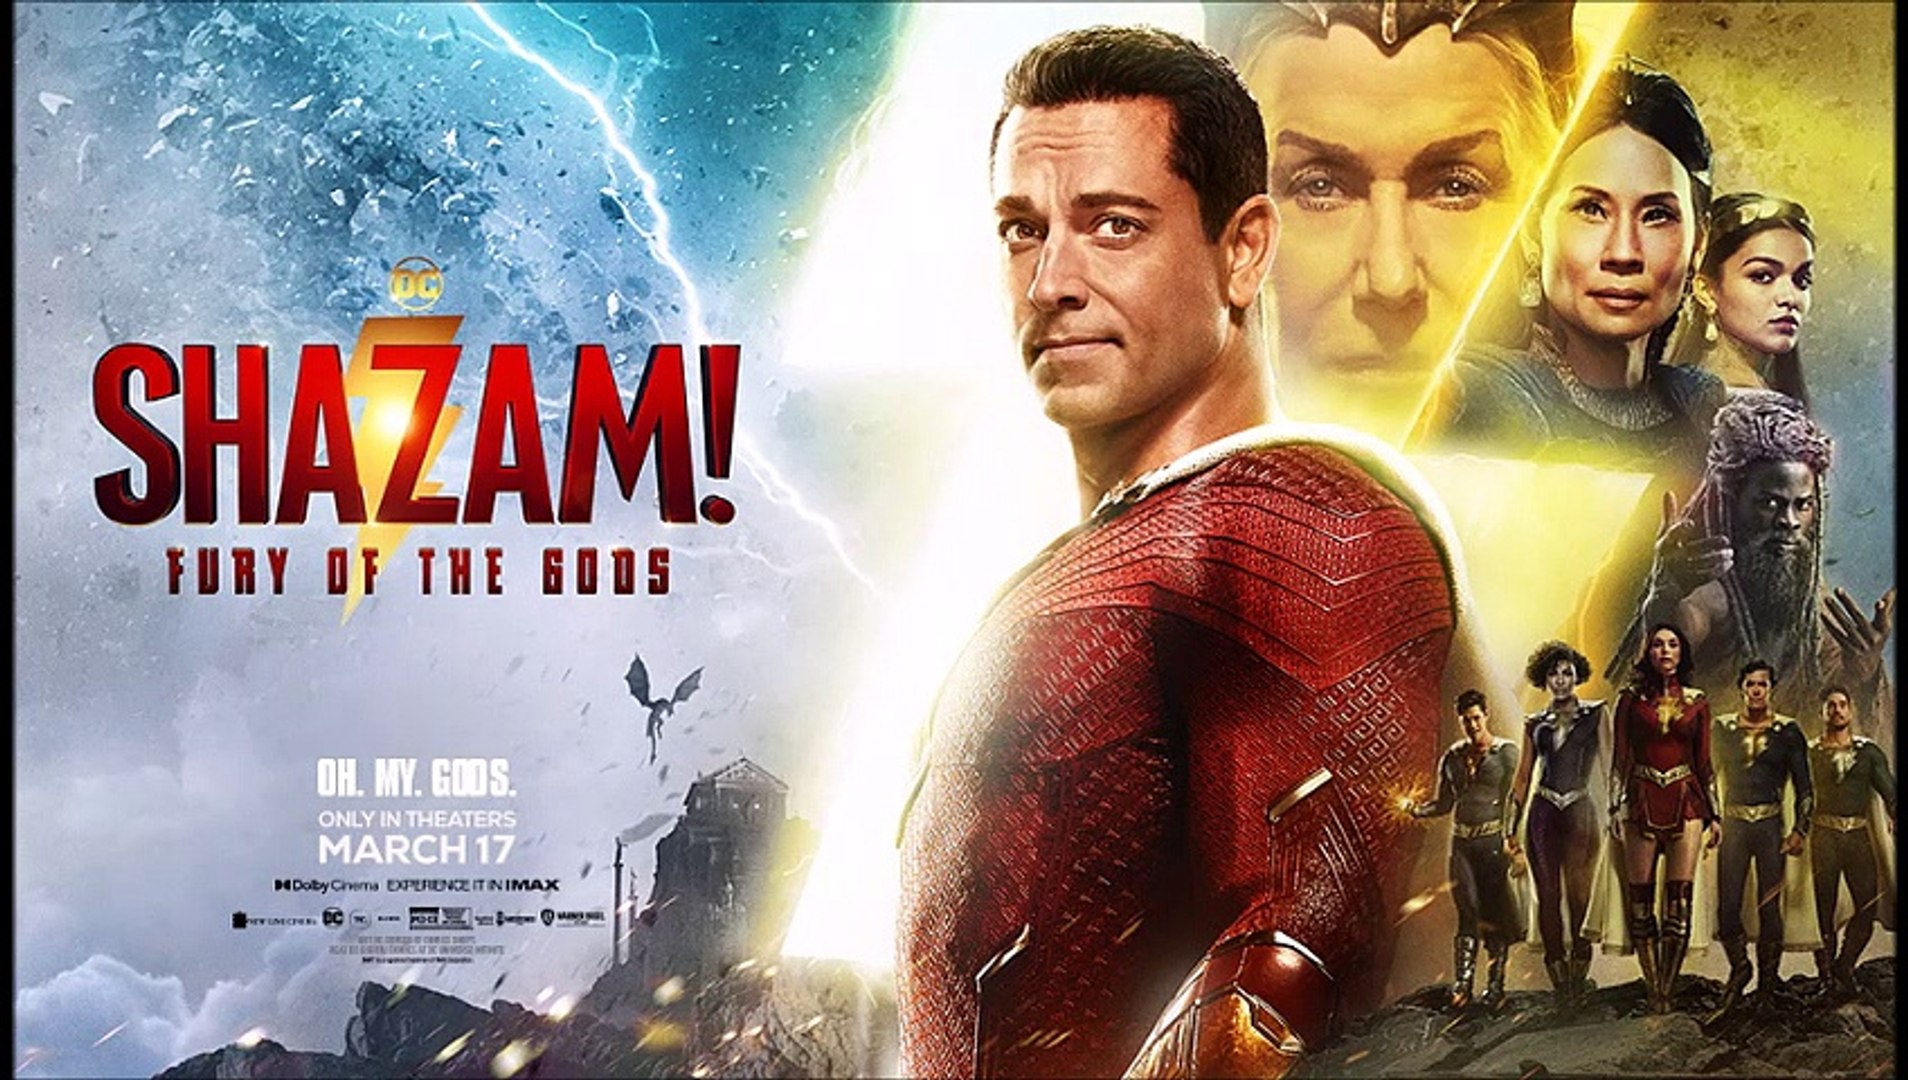 Shazam 2 Trailer: New Look at DC's Shazam Fury of the Gods